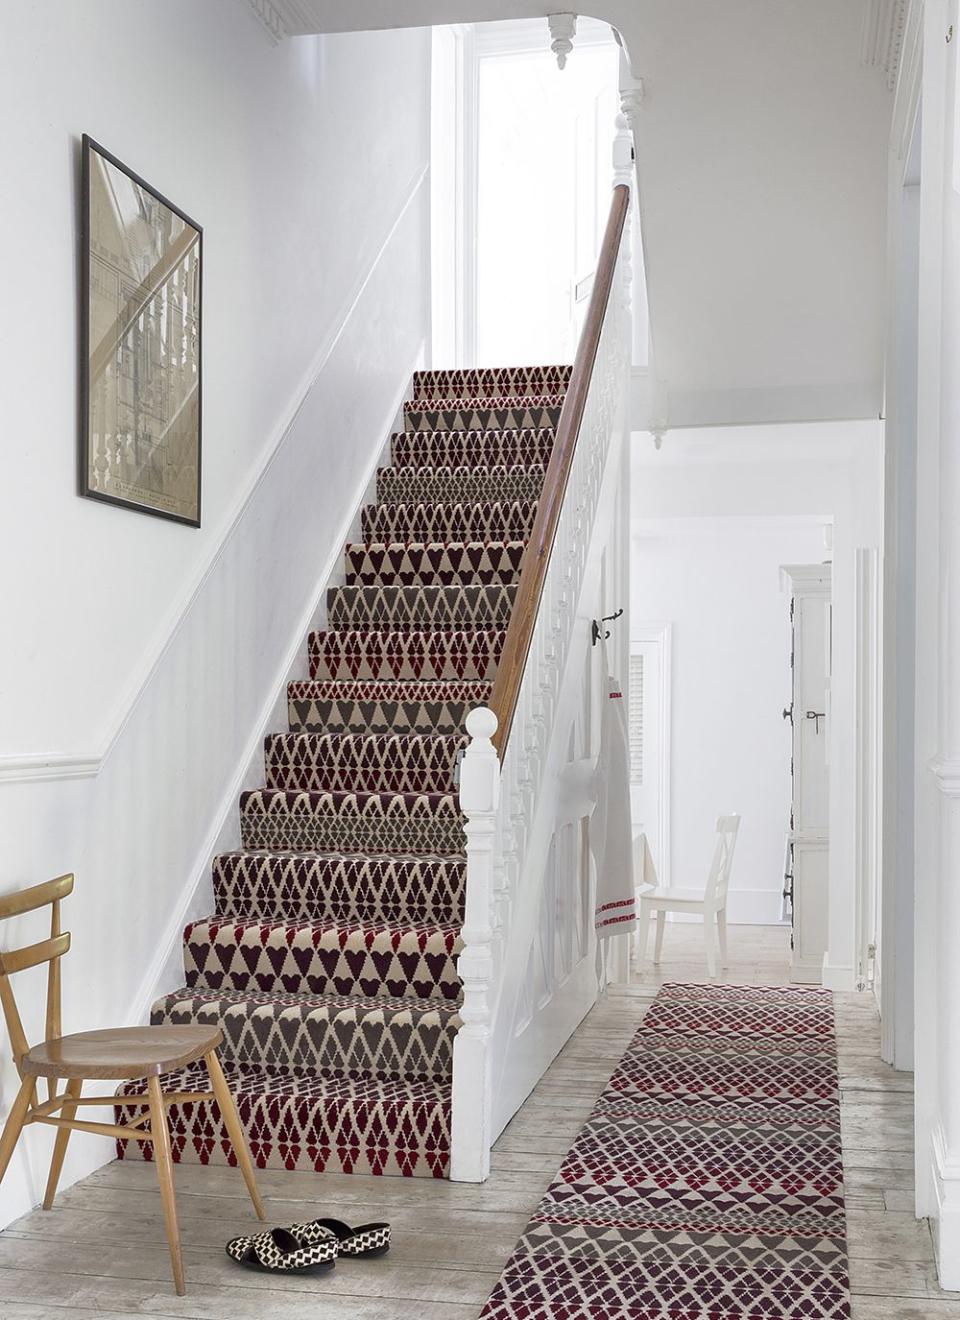 6) Patterned carpet ideas: Be brave